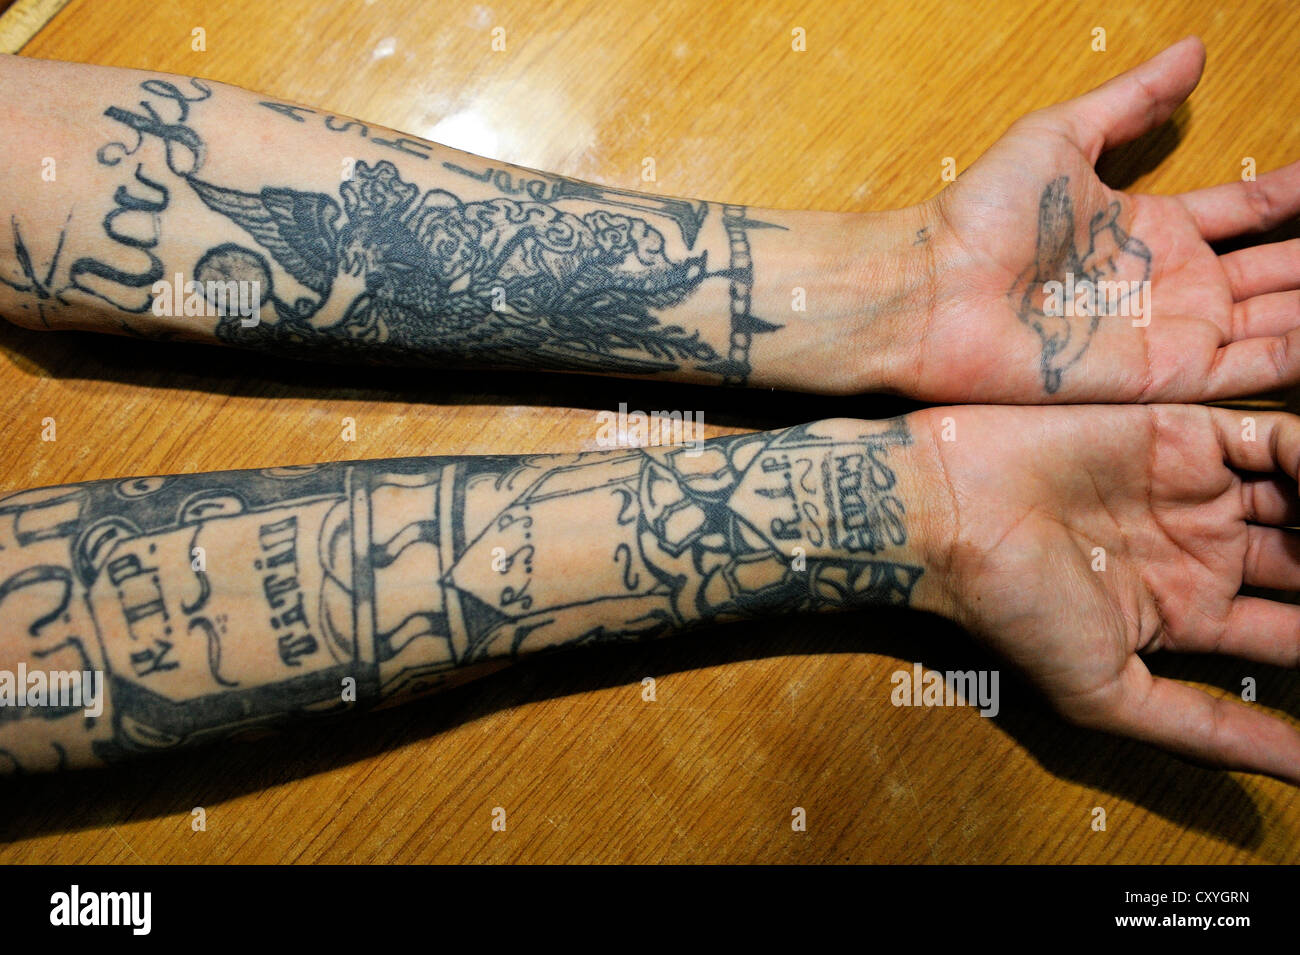 Orca tattoo | Killer whale tattoo, Tattoos, Whale tattoos